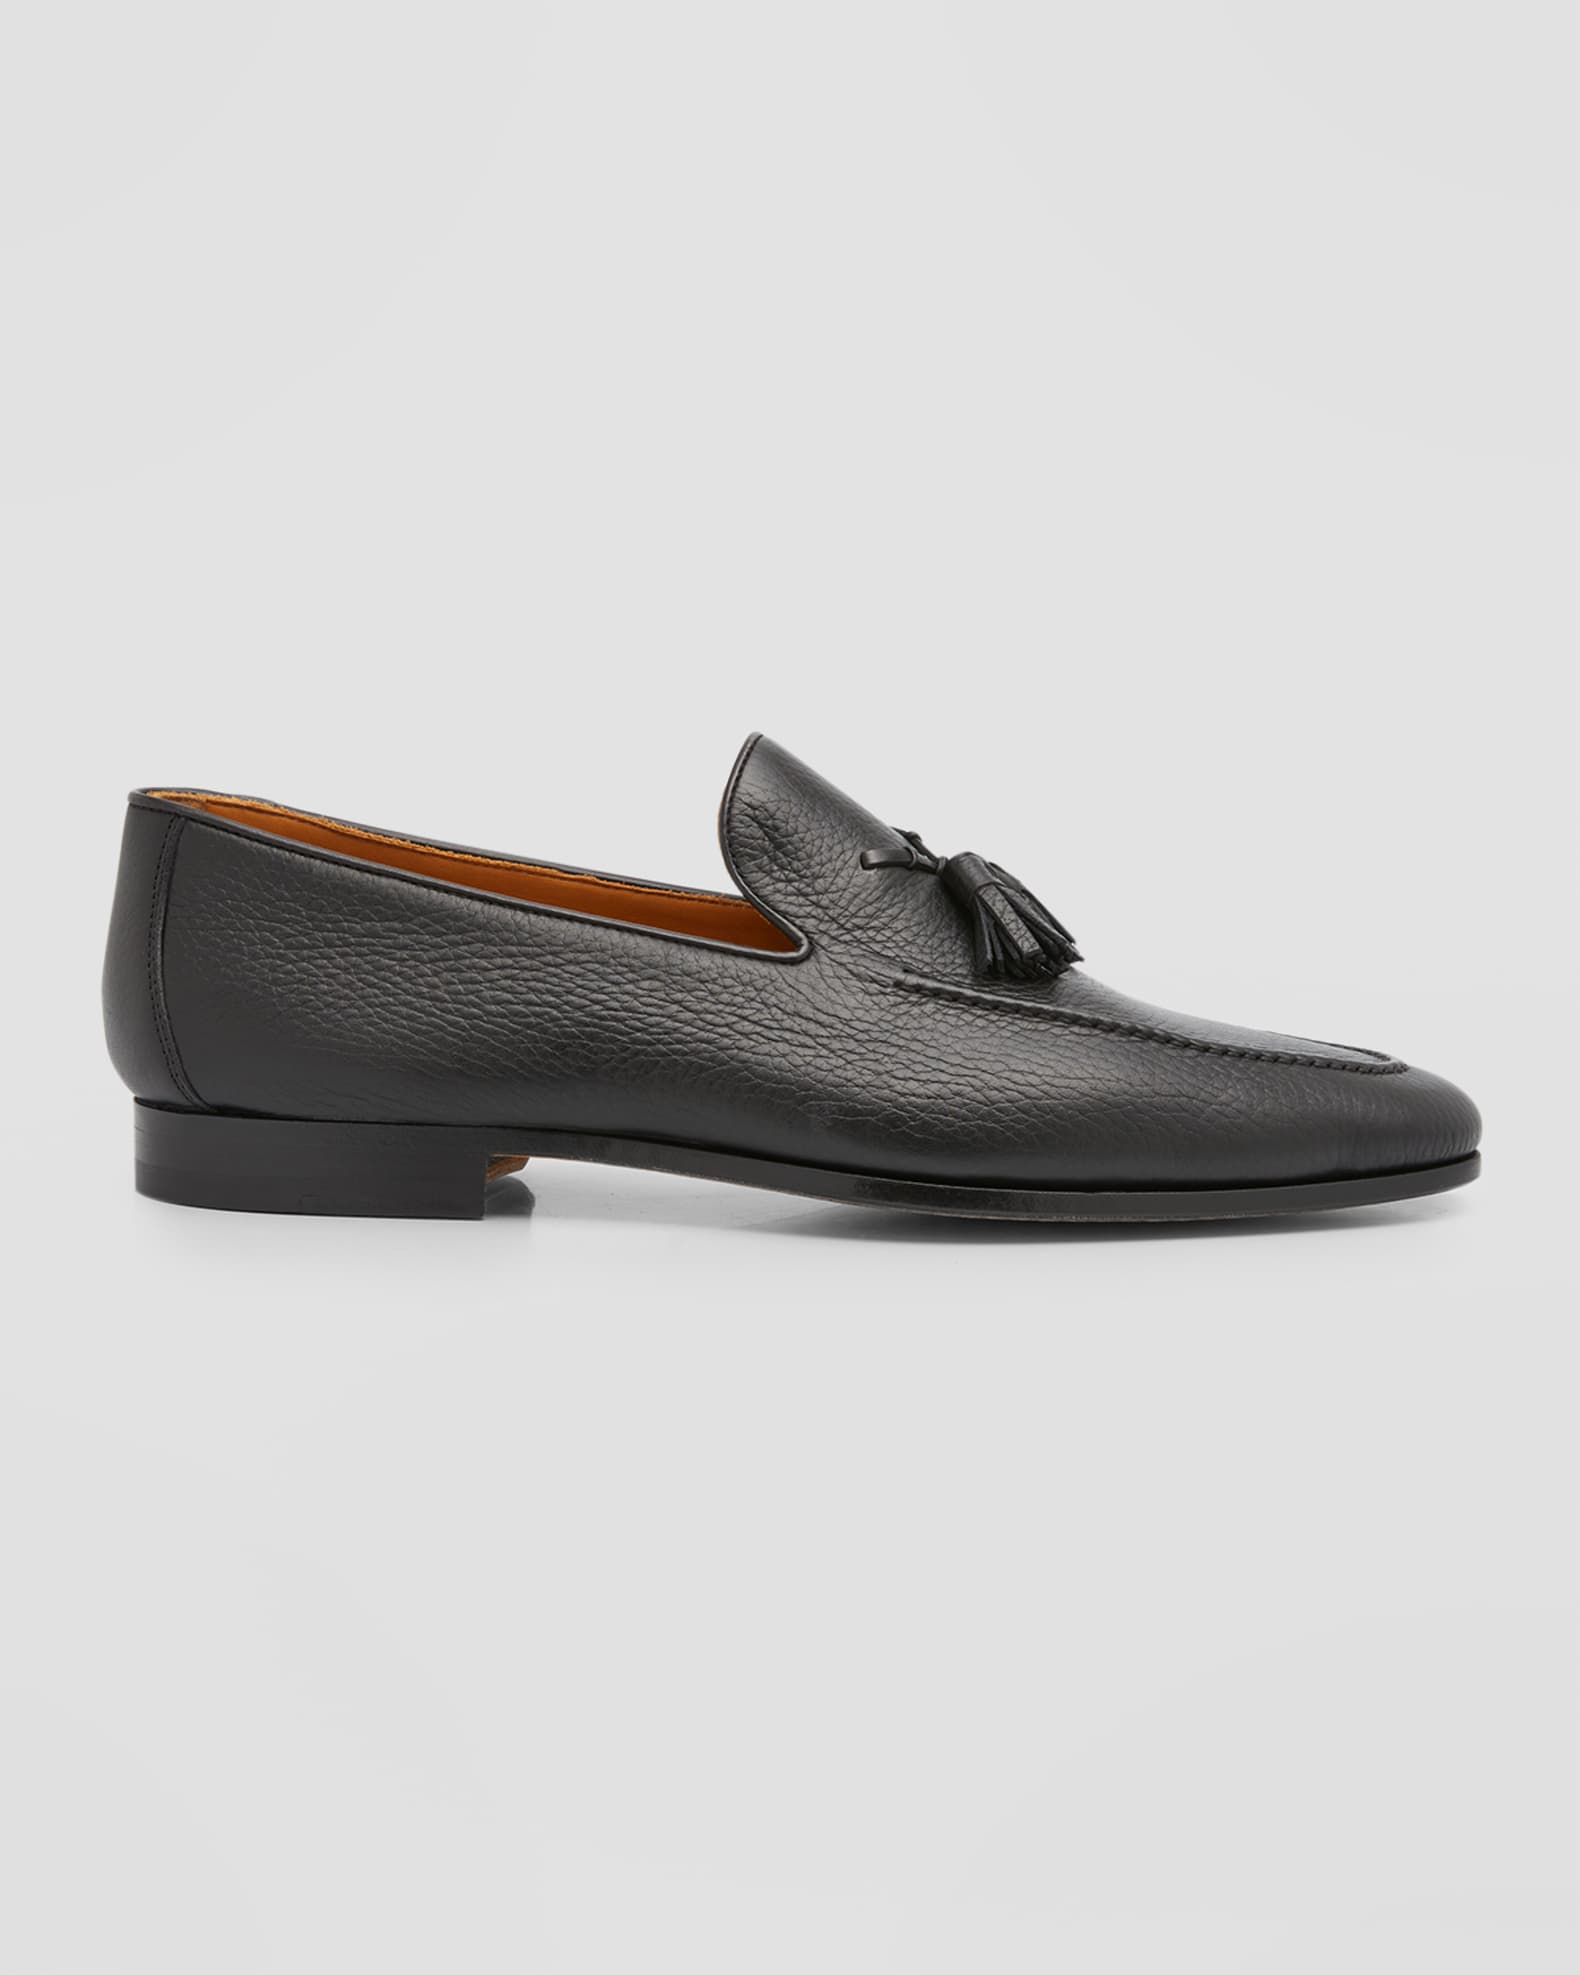 Magnanni Men's Seneca Grained Leather Tassel Loafers | Neiman Marcus